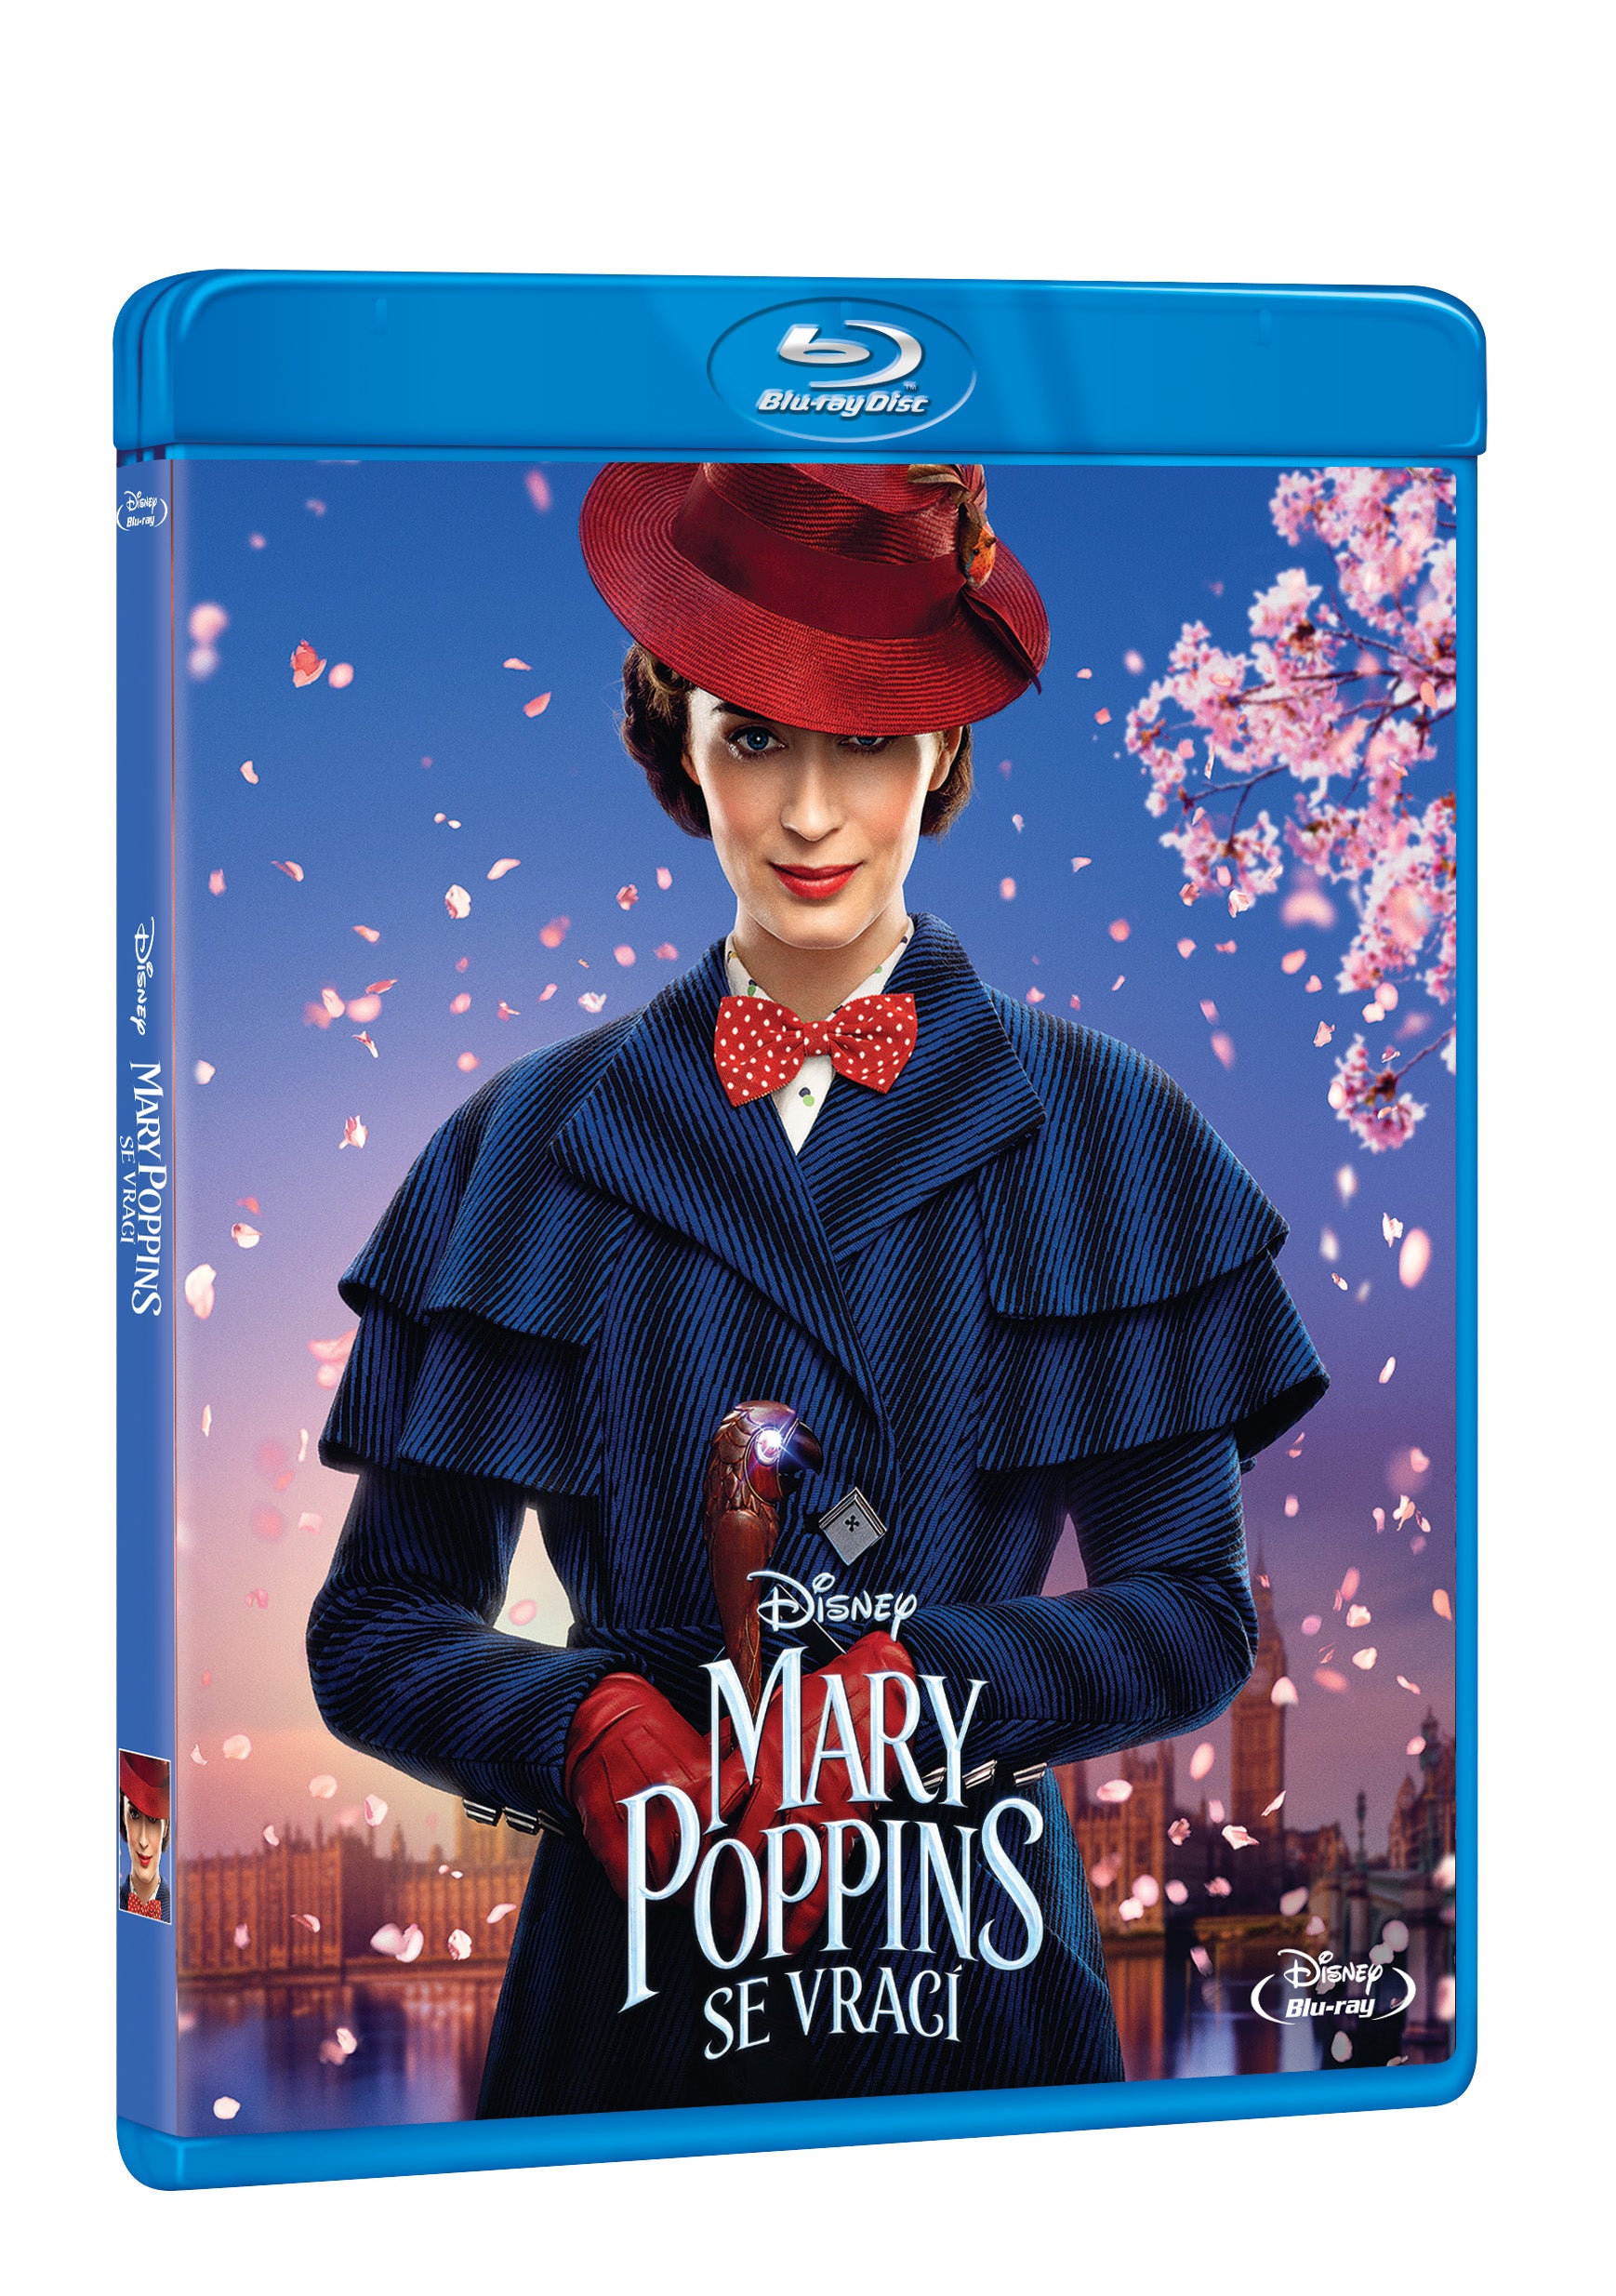 Mary Poppins se vraci BD / Mary Poppins Returns - Czech version